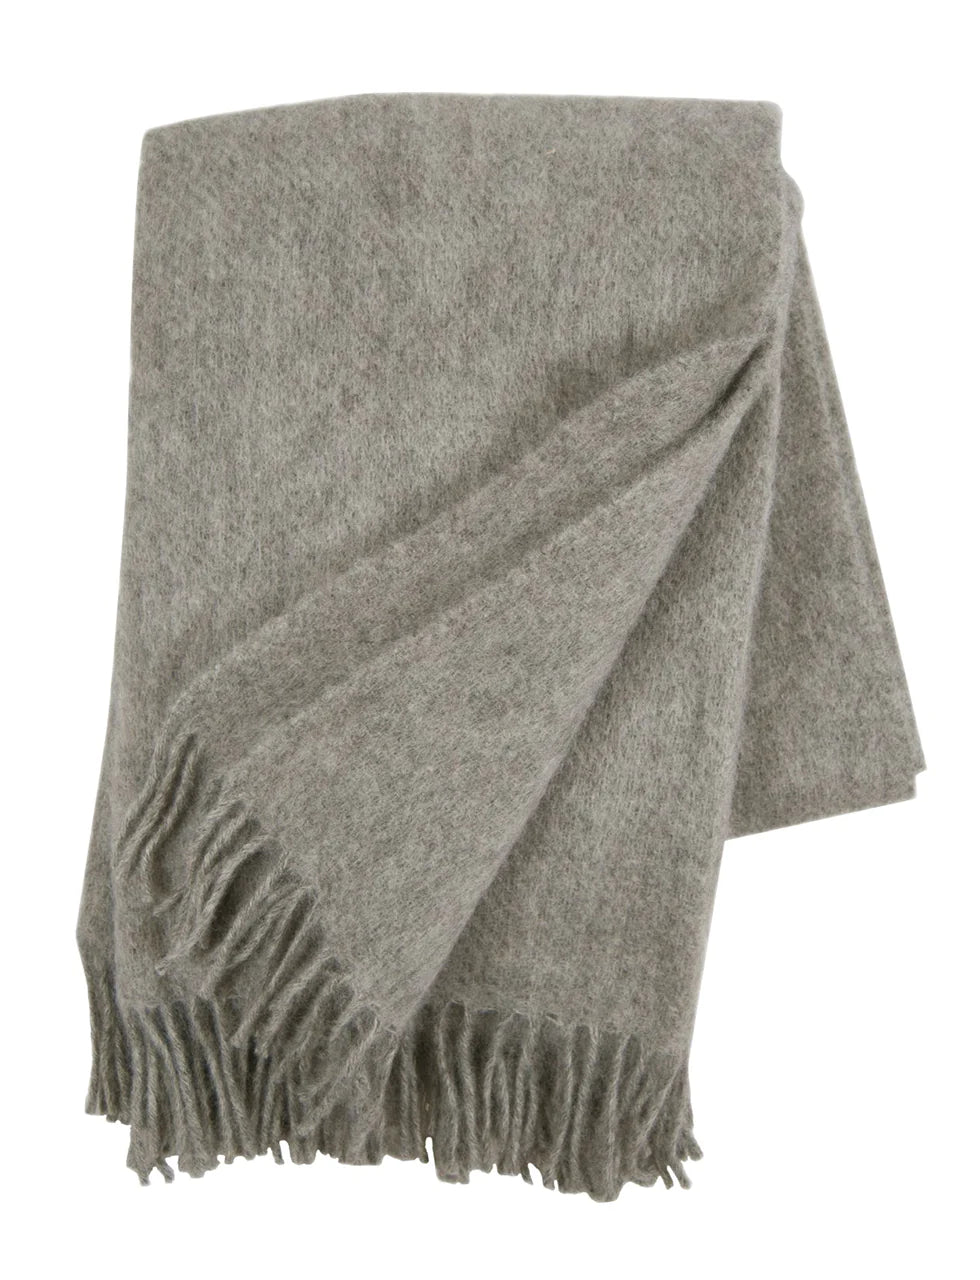 Klippan Gotland Throw Blanket - Natural Grey